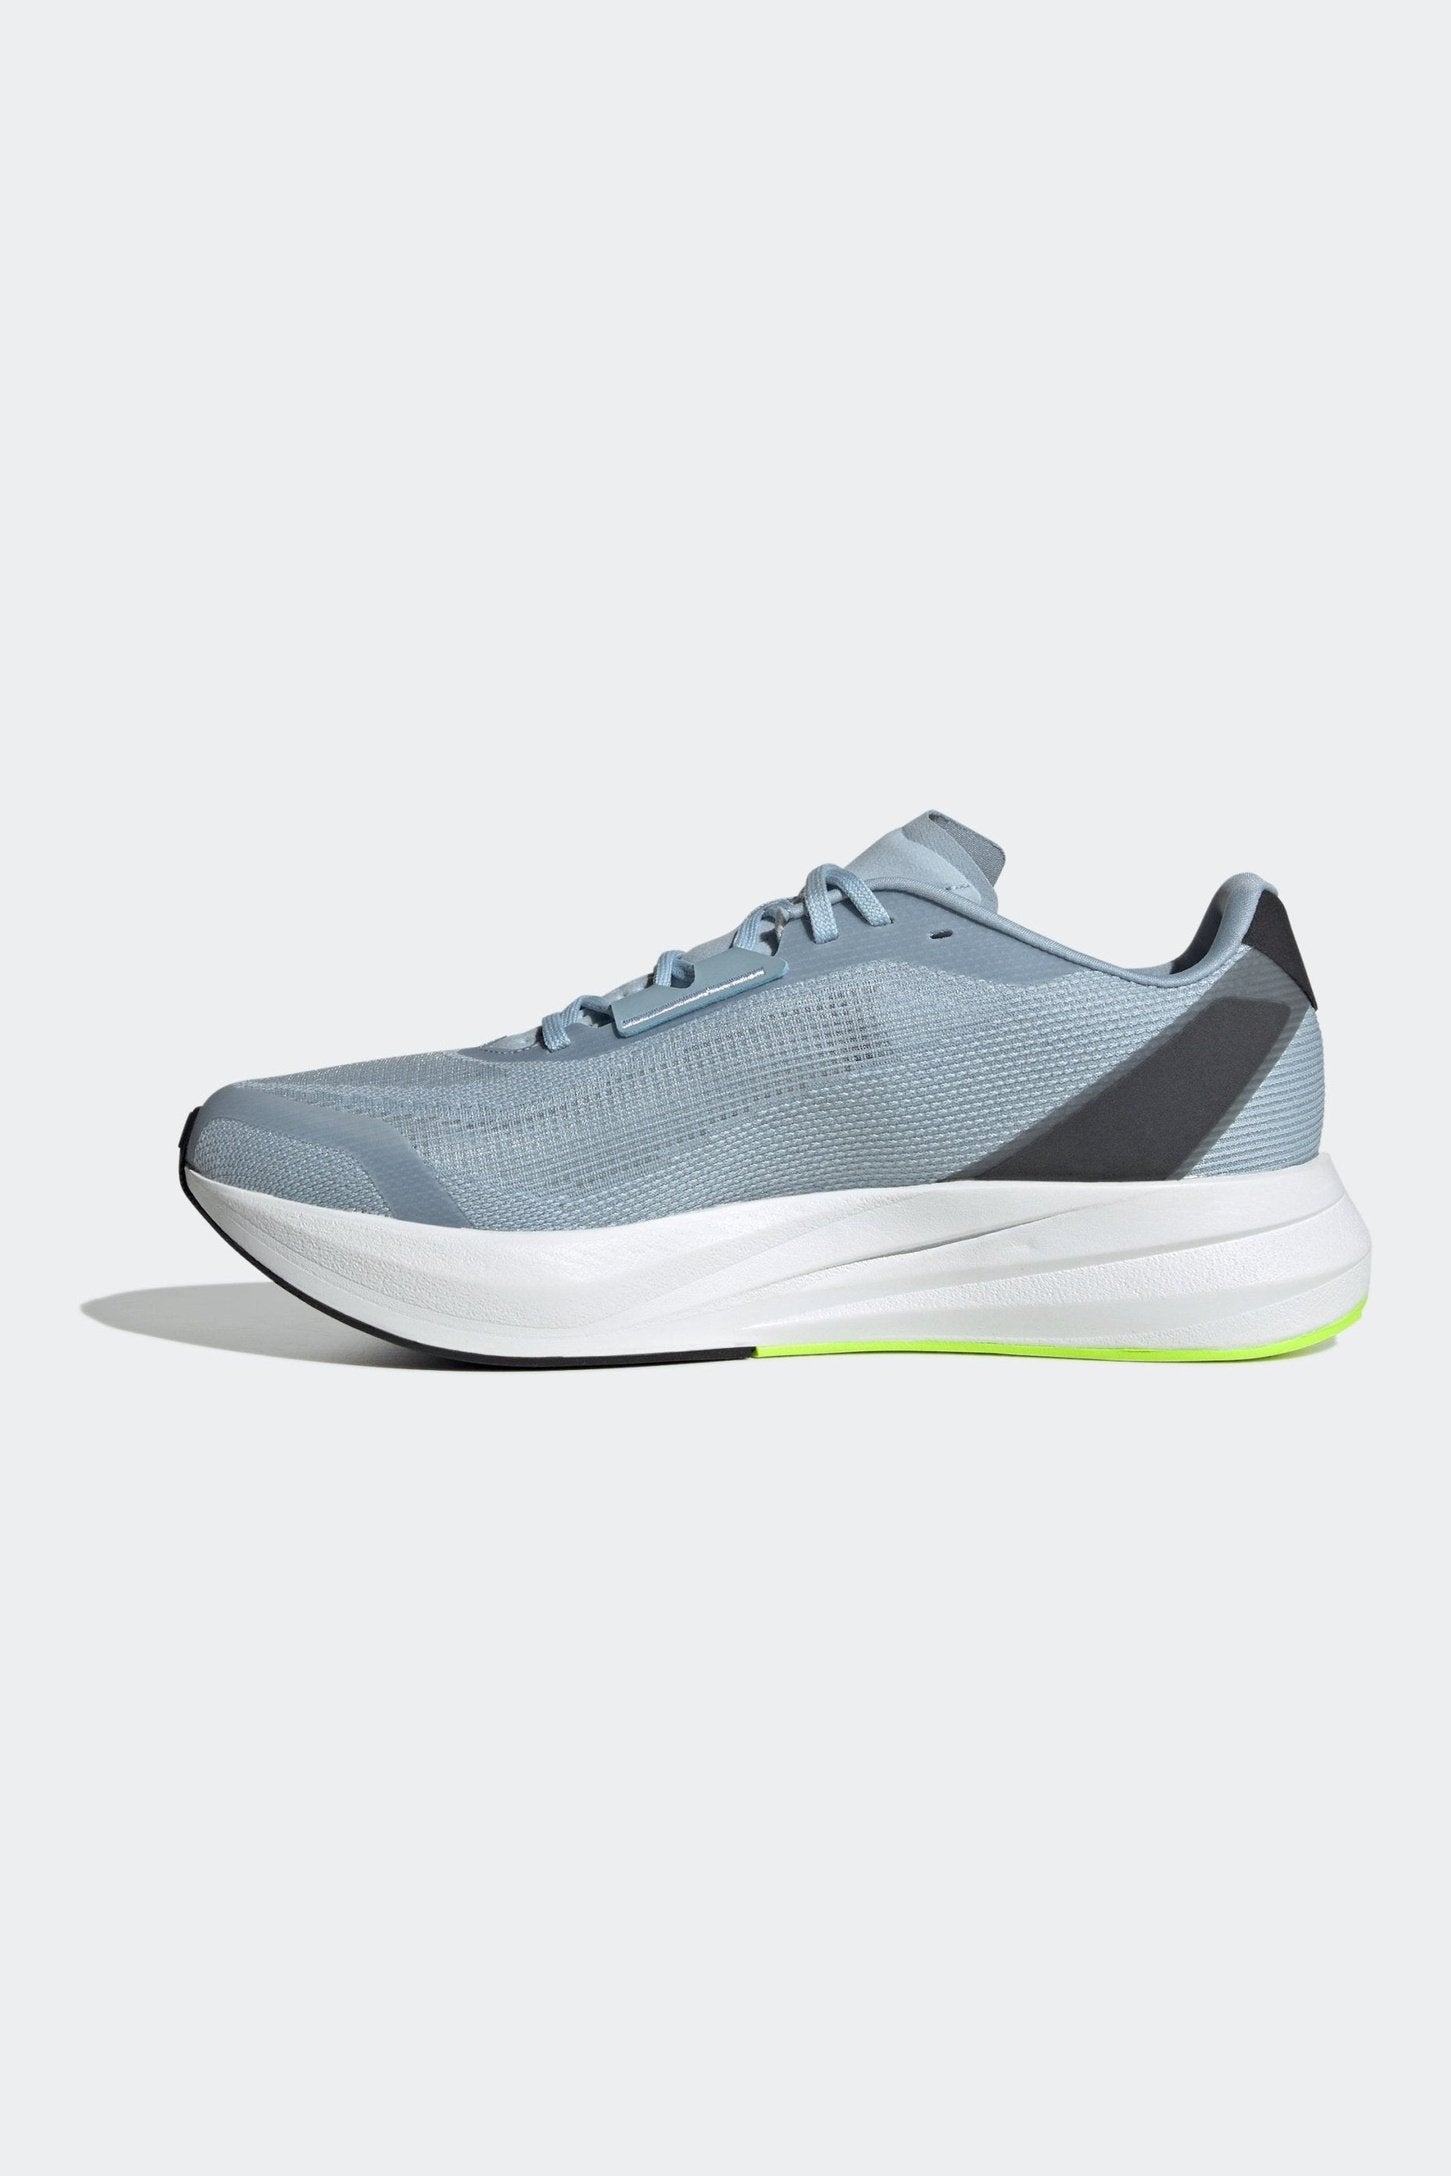 ADIDAS - נעלי ספורט לגברים DURAMO SPEED בצבע כחול ואפור - MASHBIR//365